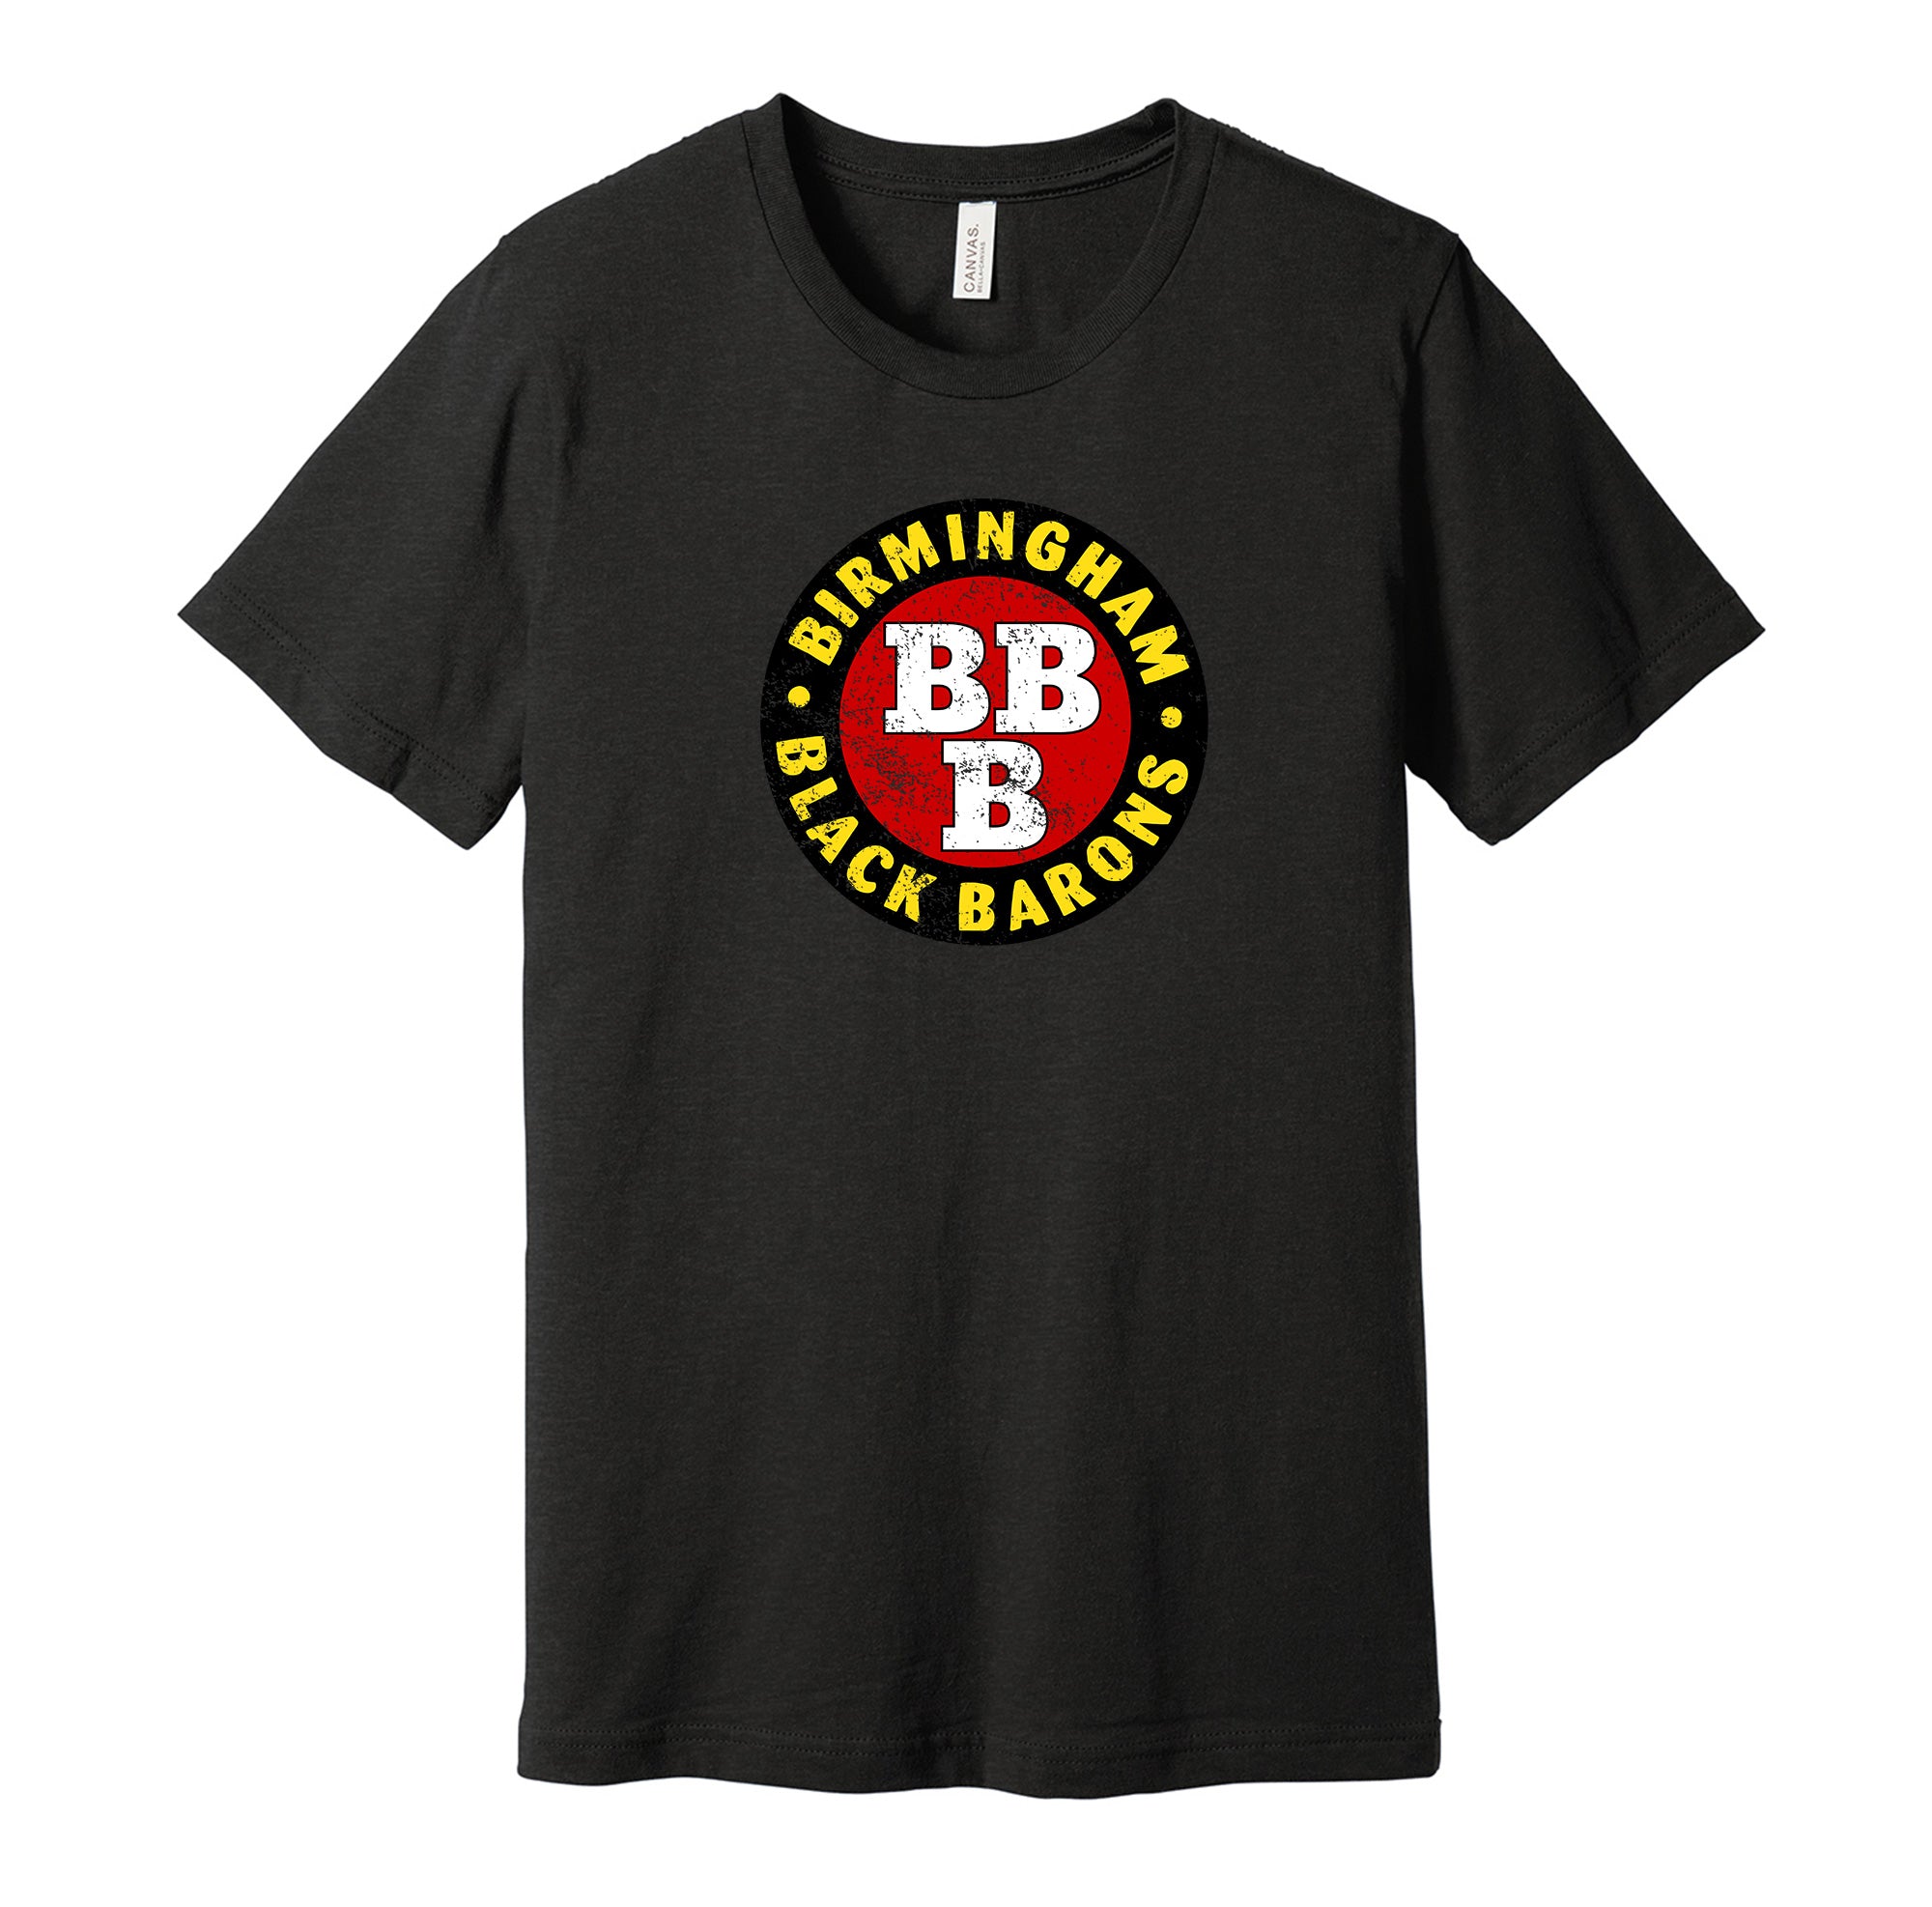 Hyper Than Hype Shirts Birmingham Black Barons Distressed Logo Shirt - Defunct Baseball Team - Celebrate Alabama Heritage and History - Hyper Than Hype S / Grey Shirt